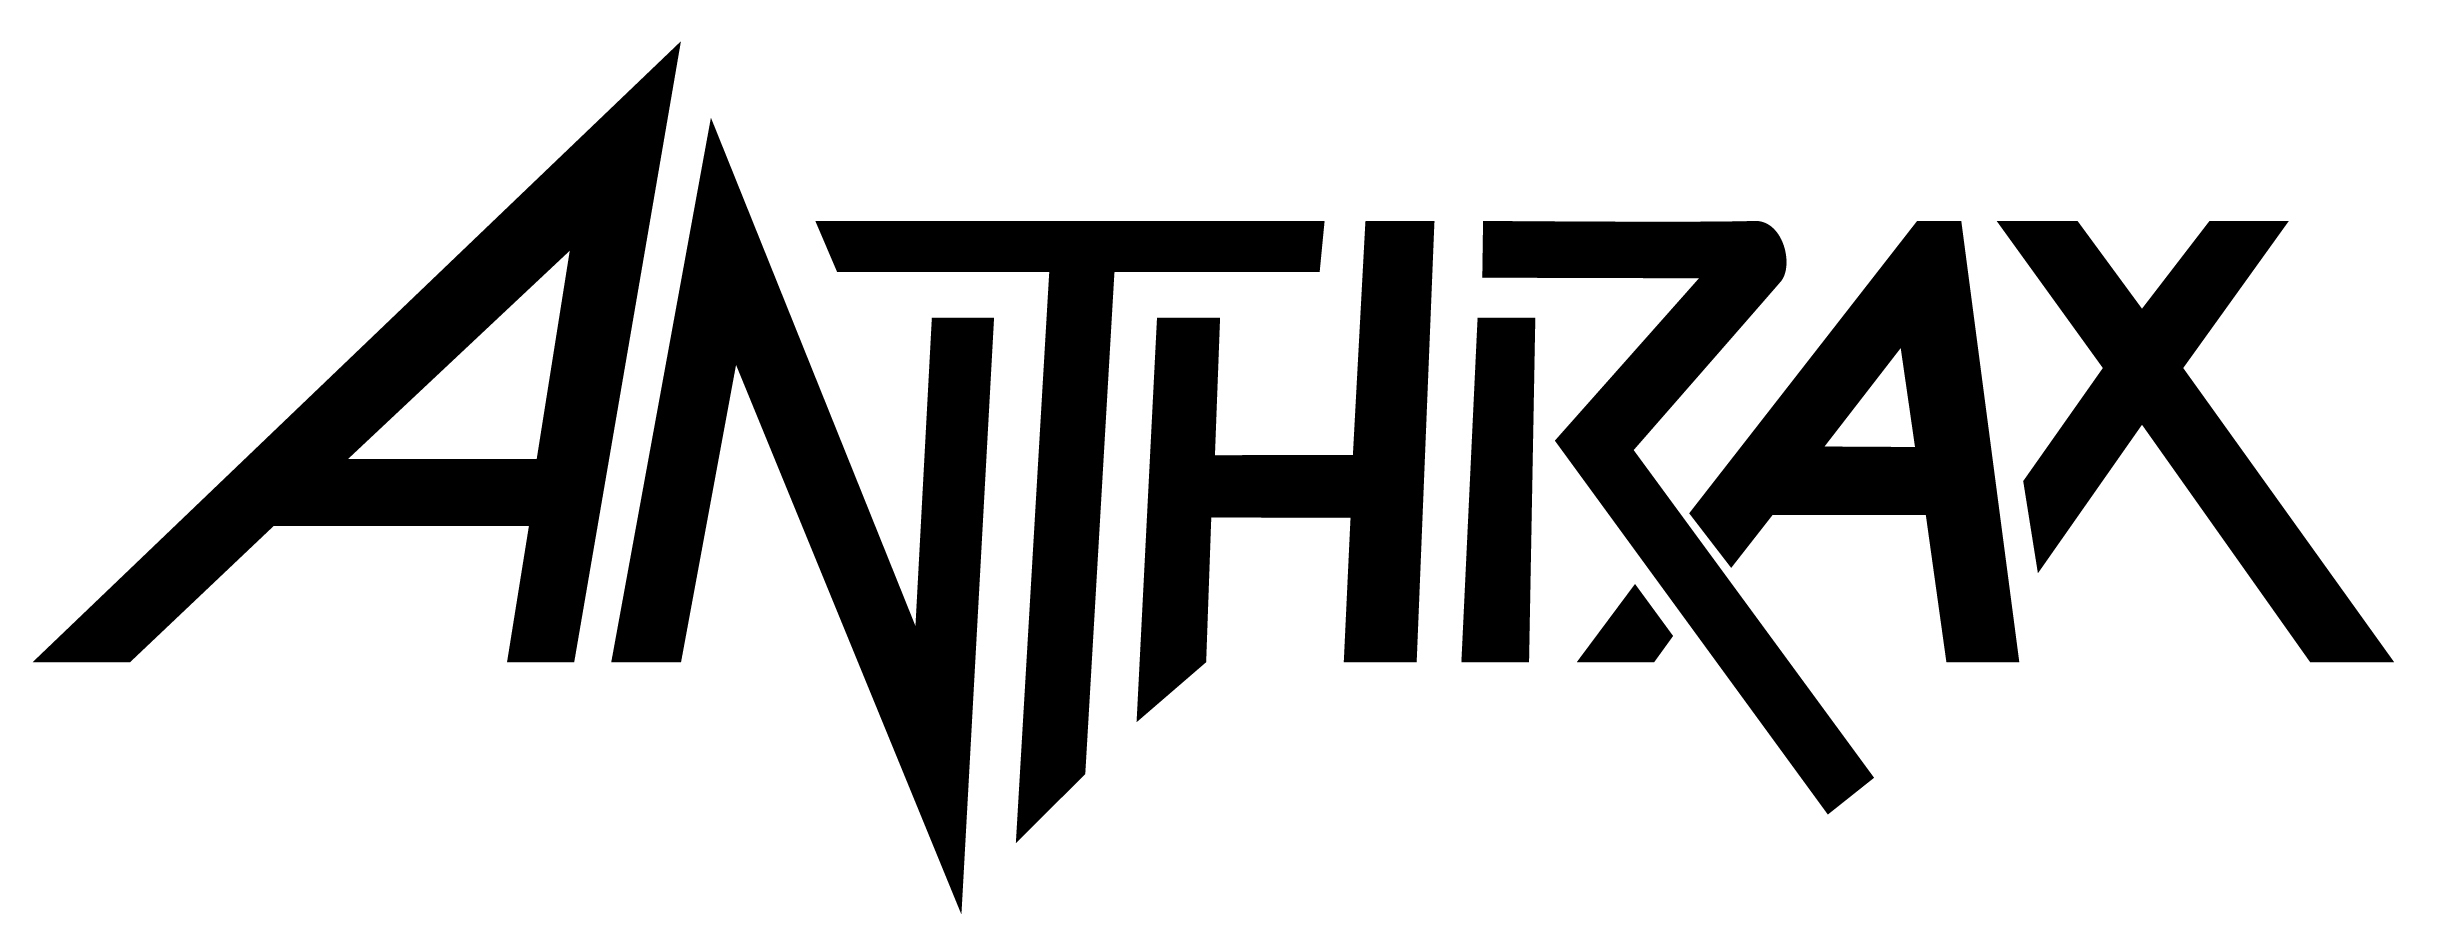 Anthrax-band-logo.jpeg